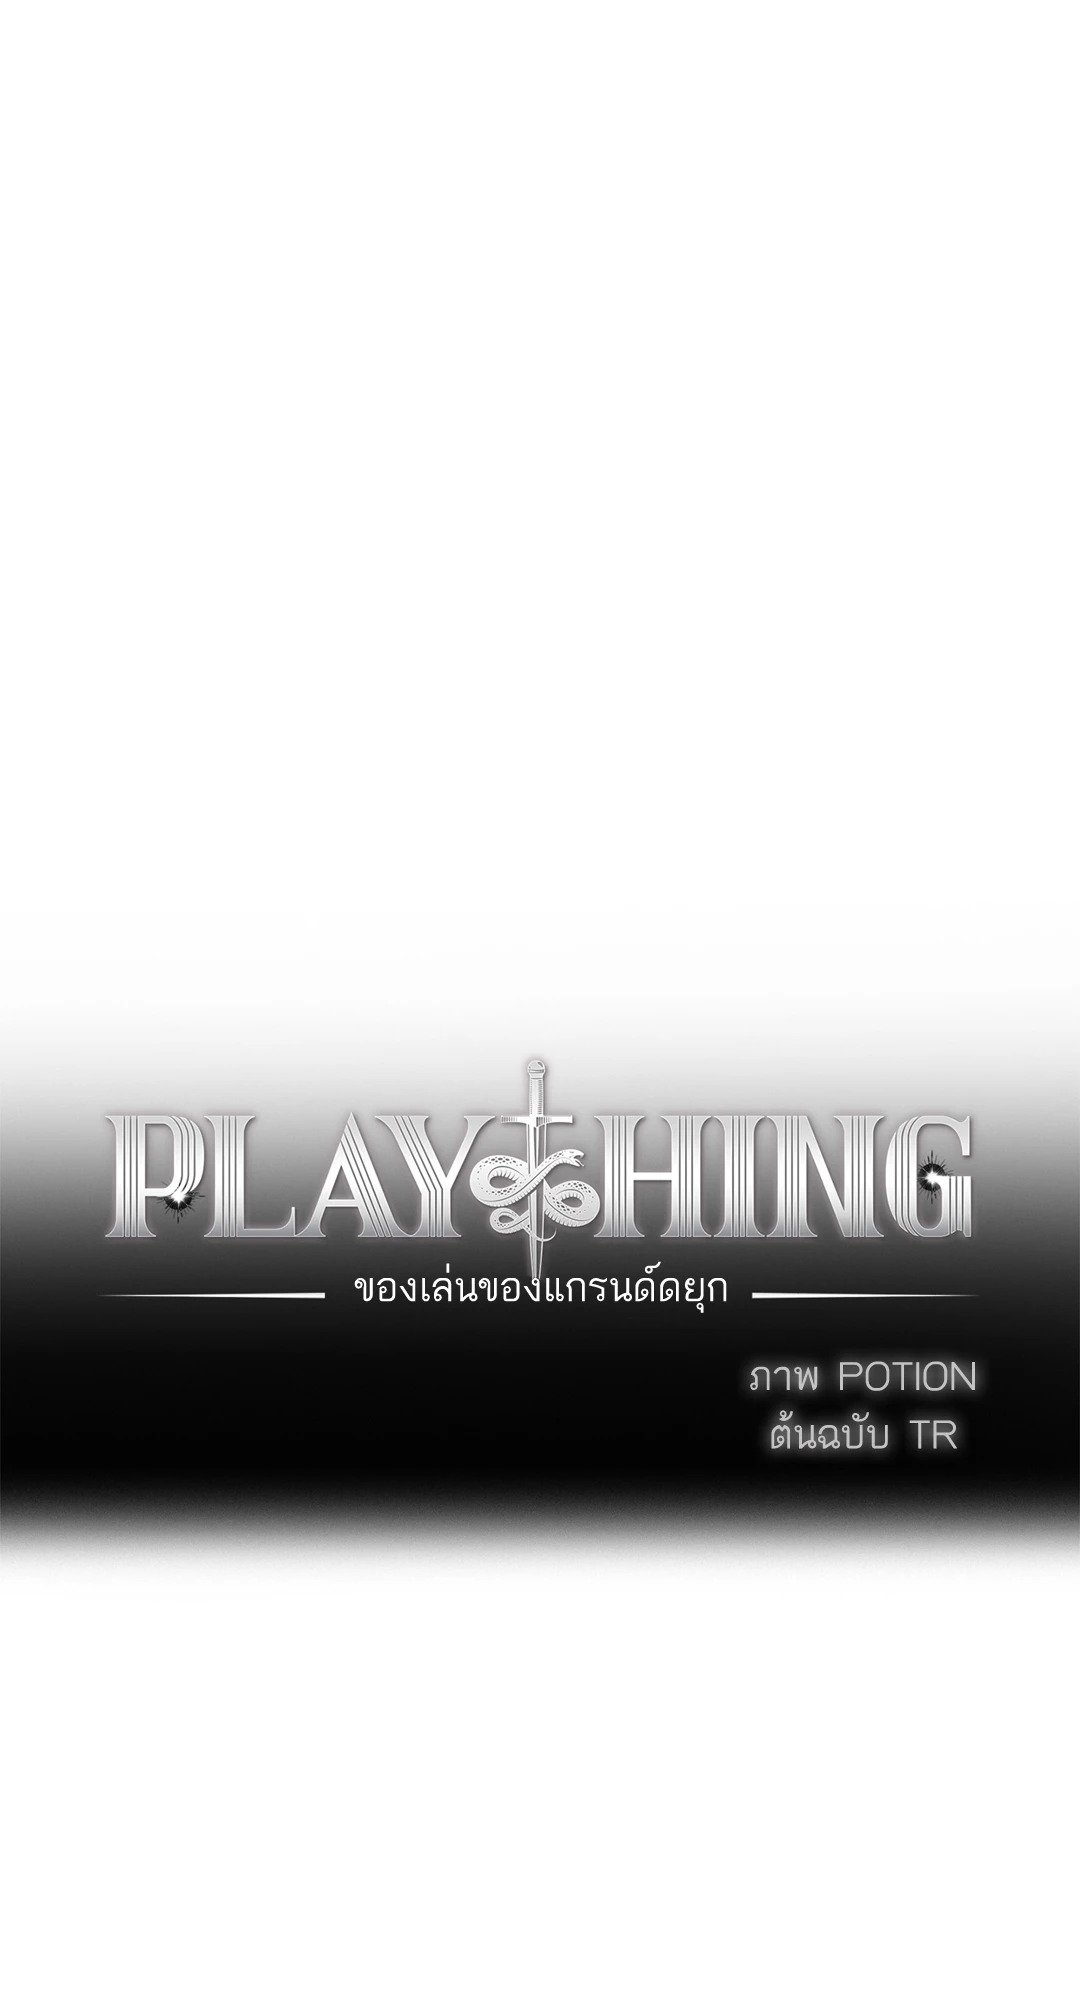 Plaything 22 07